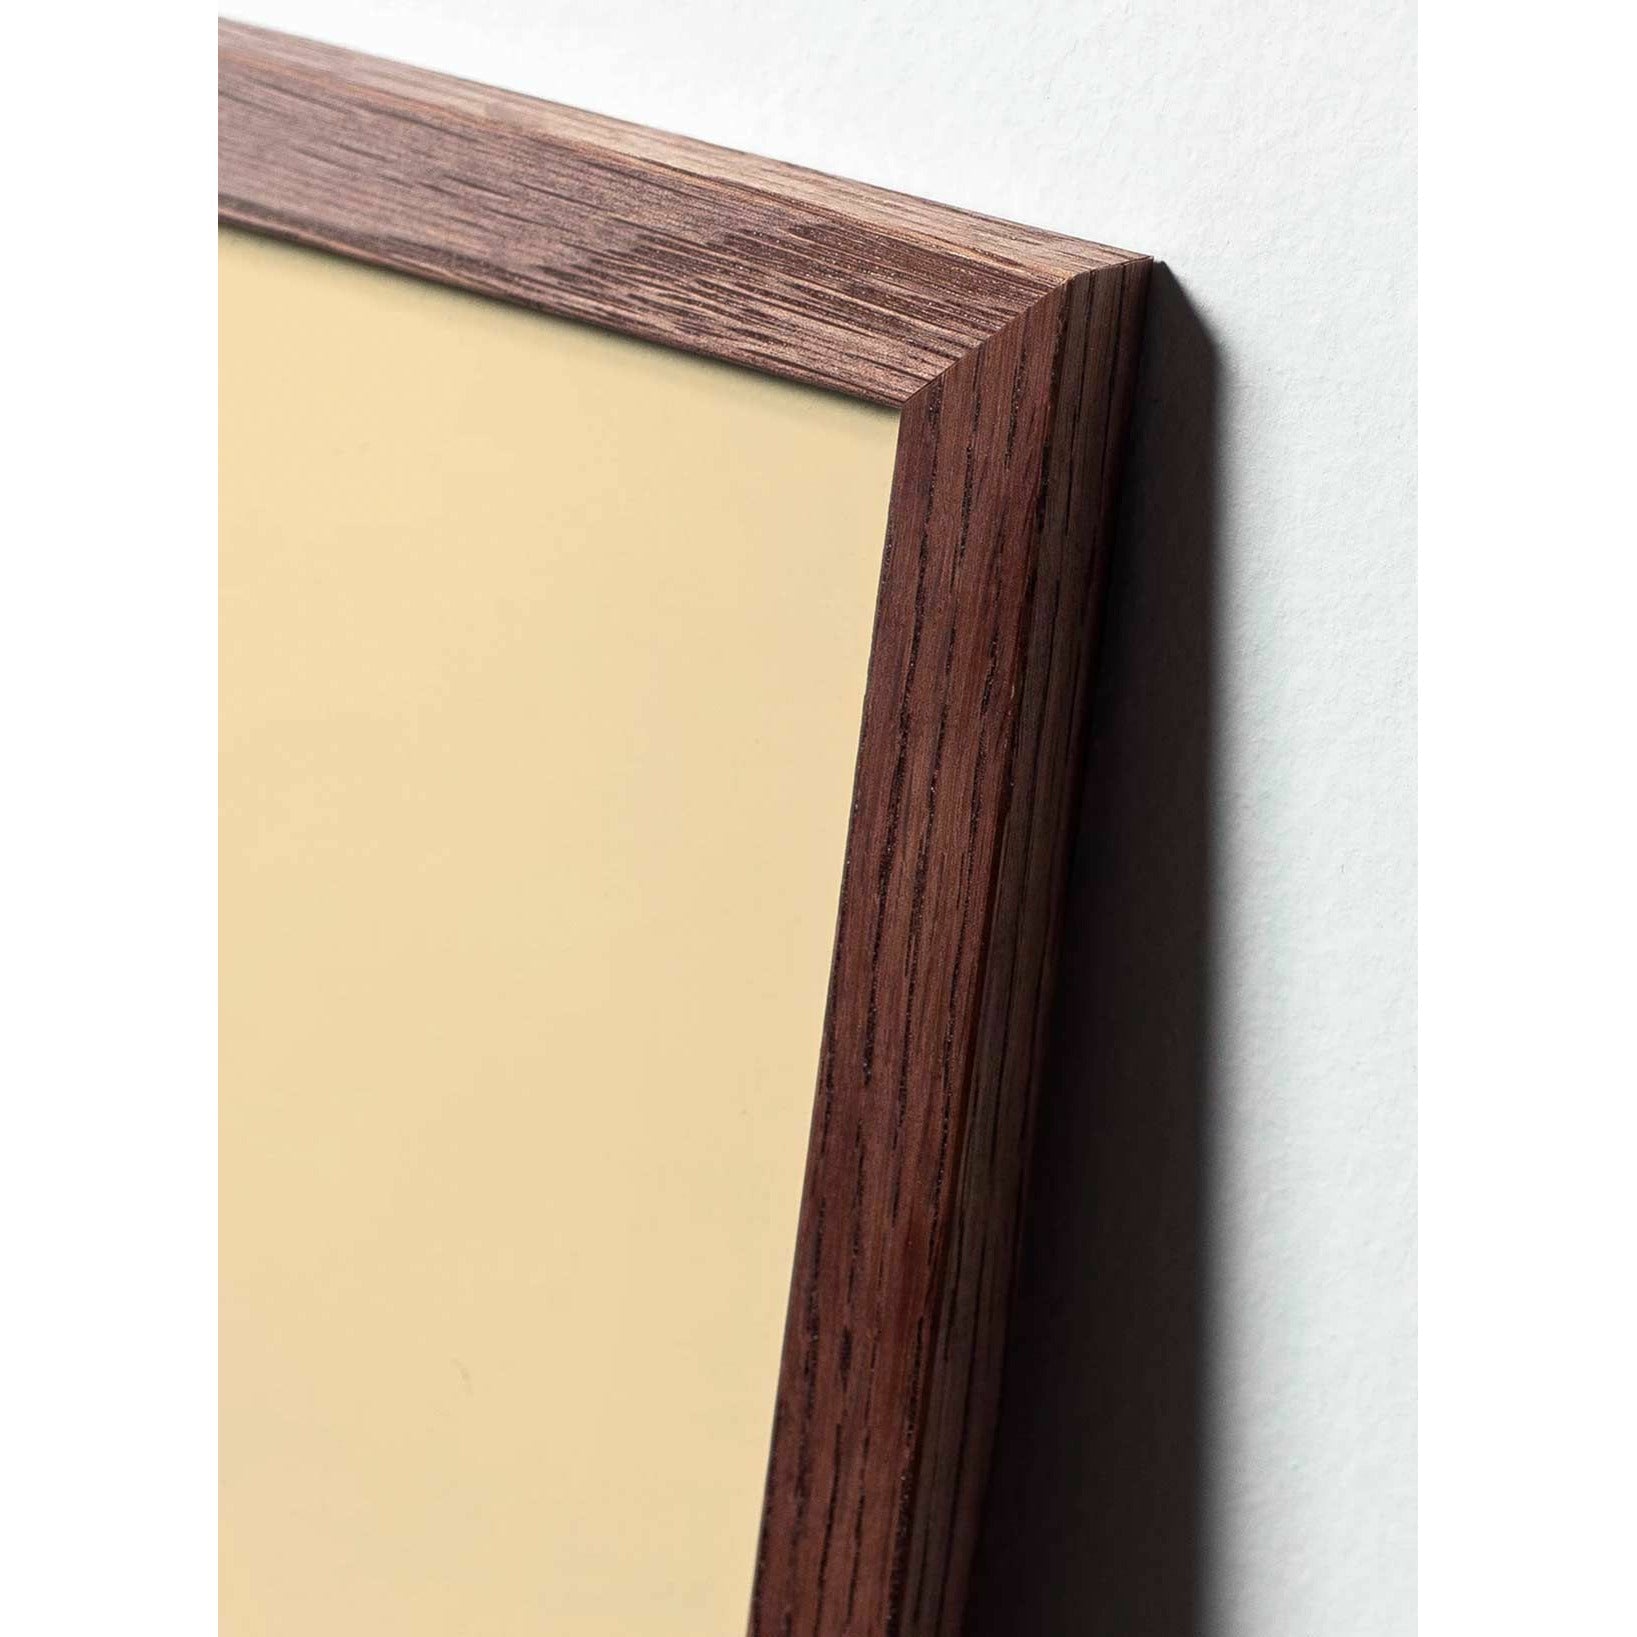 brainchild Swan Classic juliste, Dark Wood Frame A5, tummansininen tausta